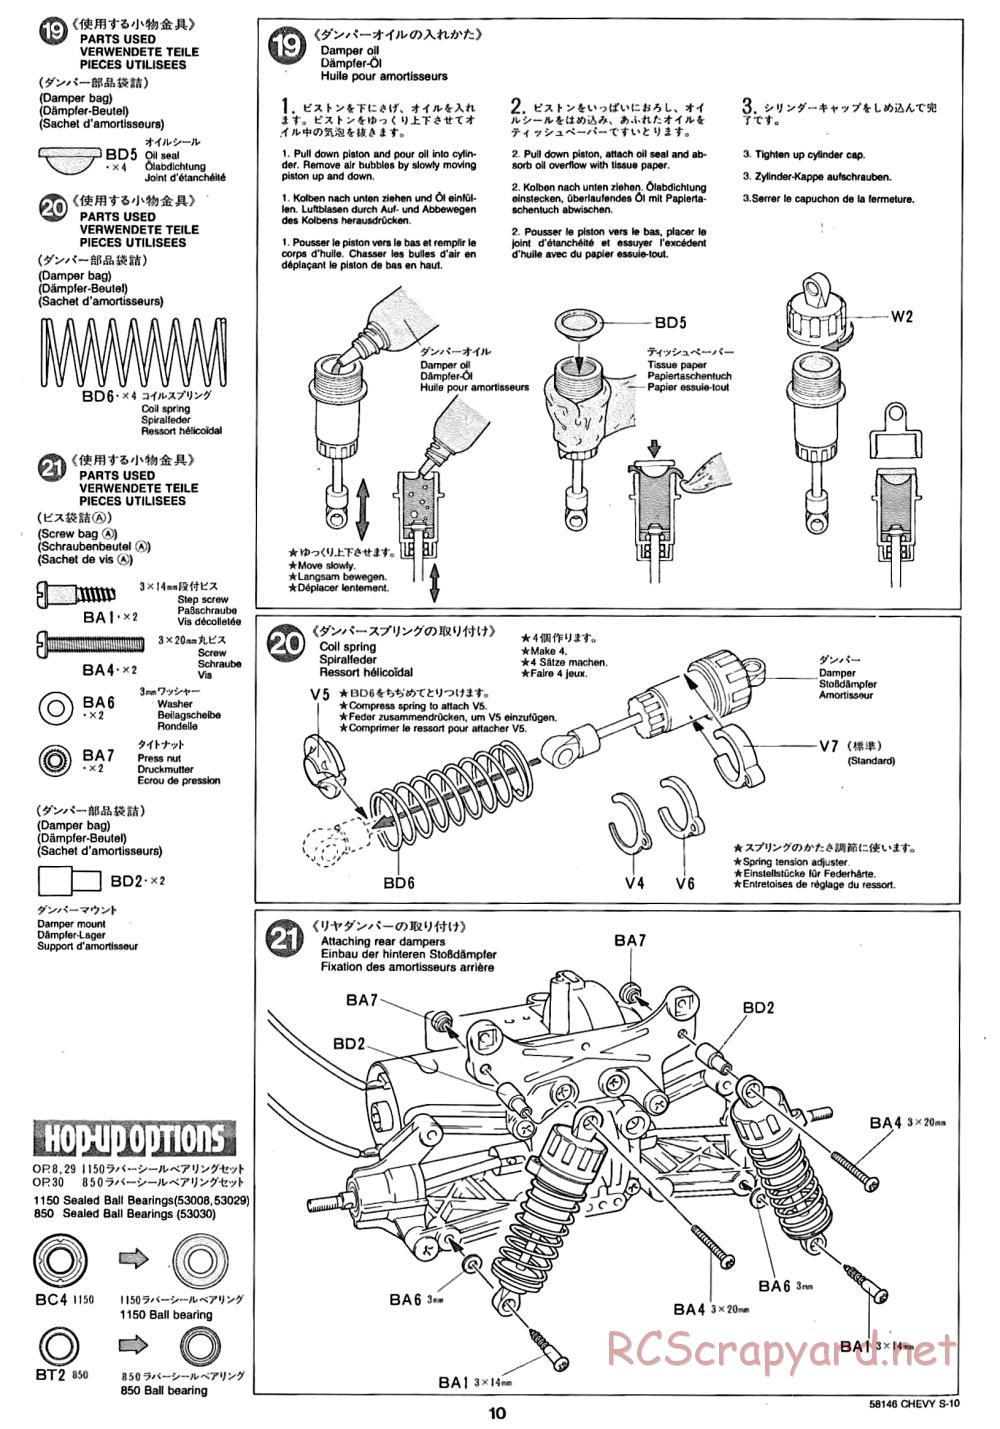 Tamiya - Chevy S-10 Chassis - Manual - Page 10